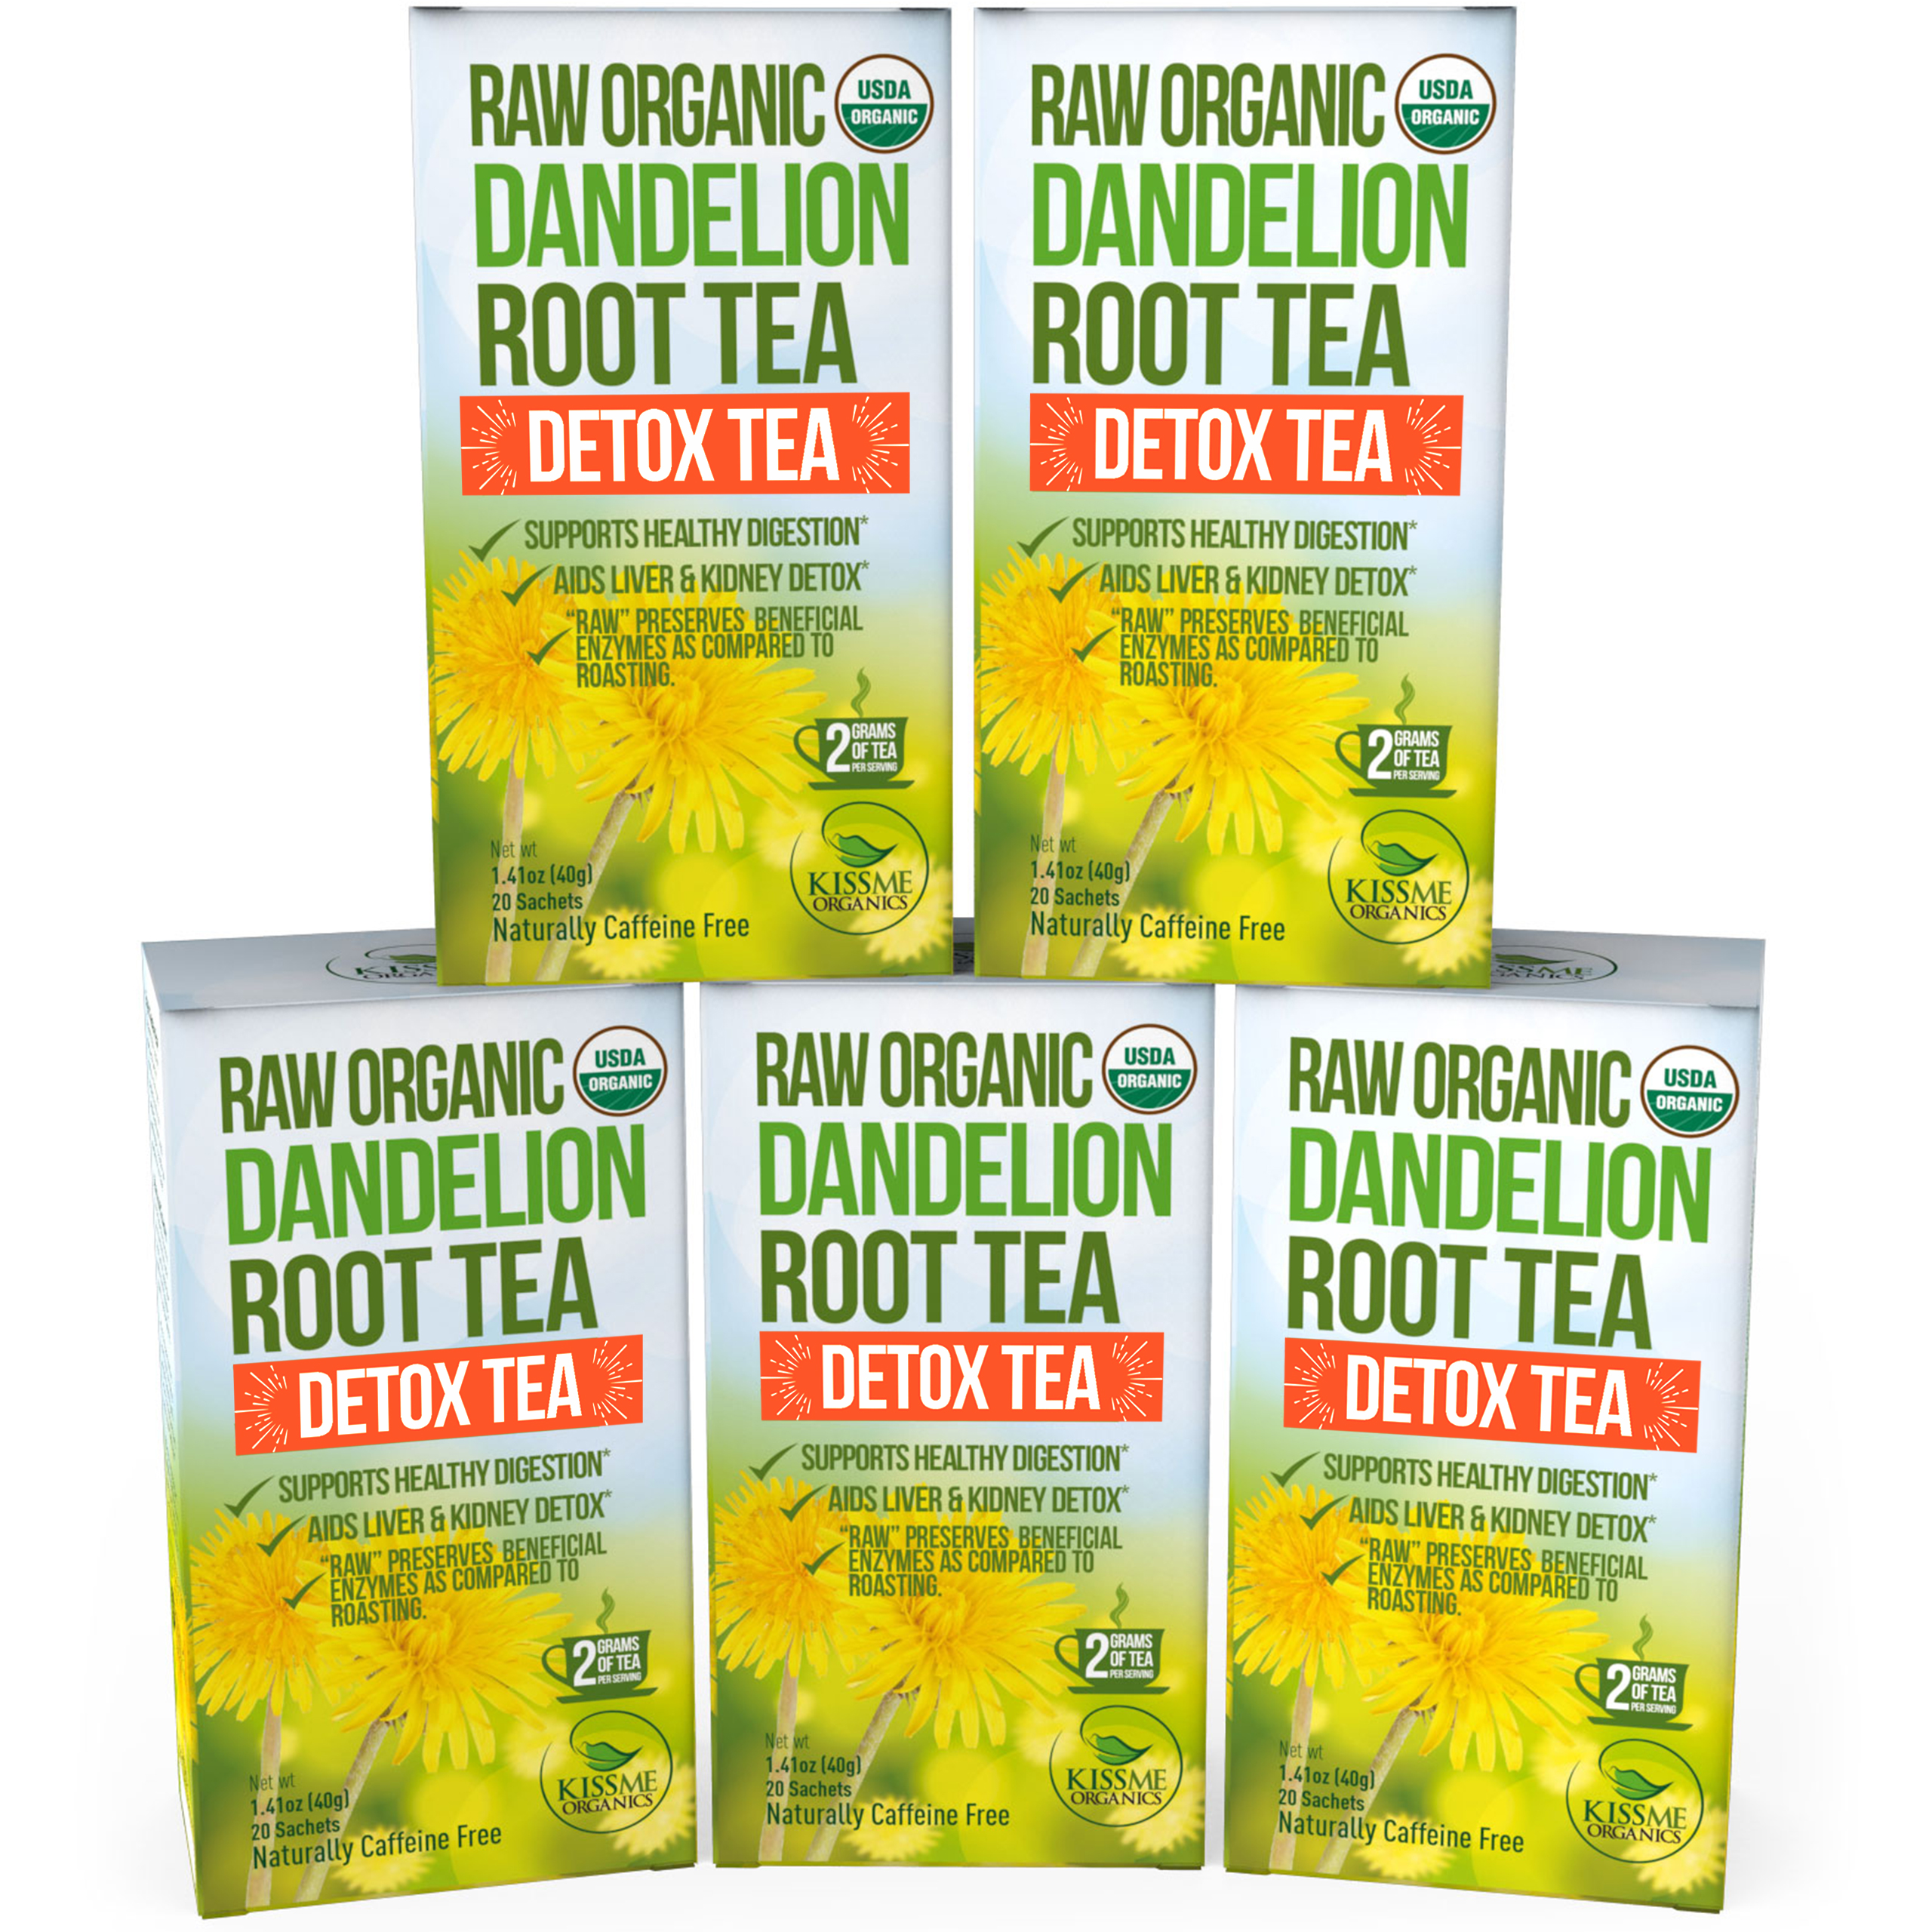 Organic Herbal Tea, Detox, Caffeine Free, 20 Sachets, 1.41 oz (40 g)